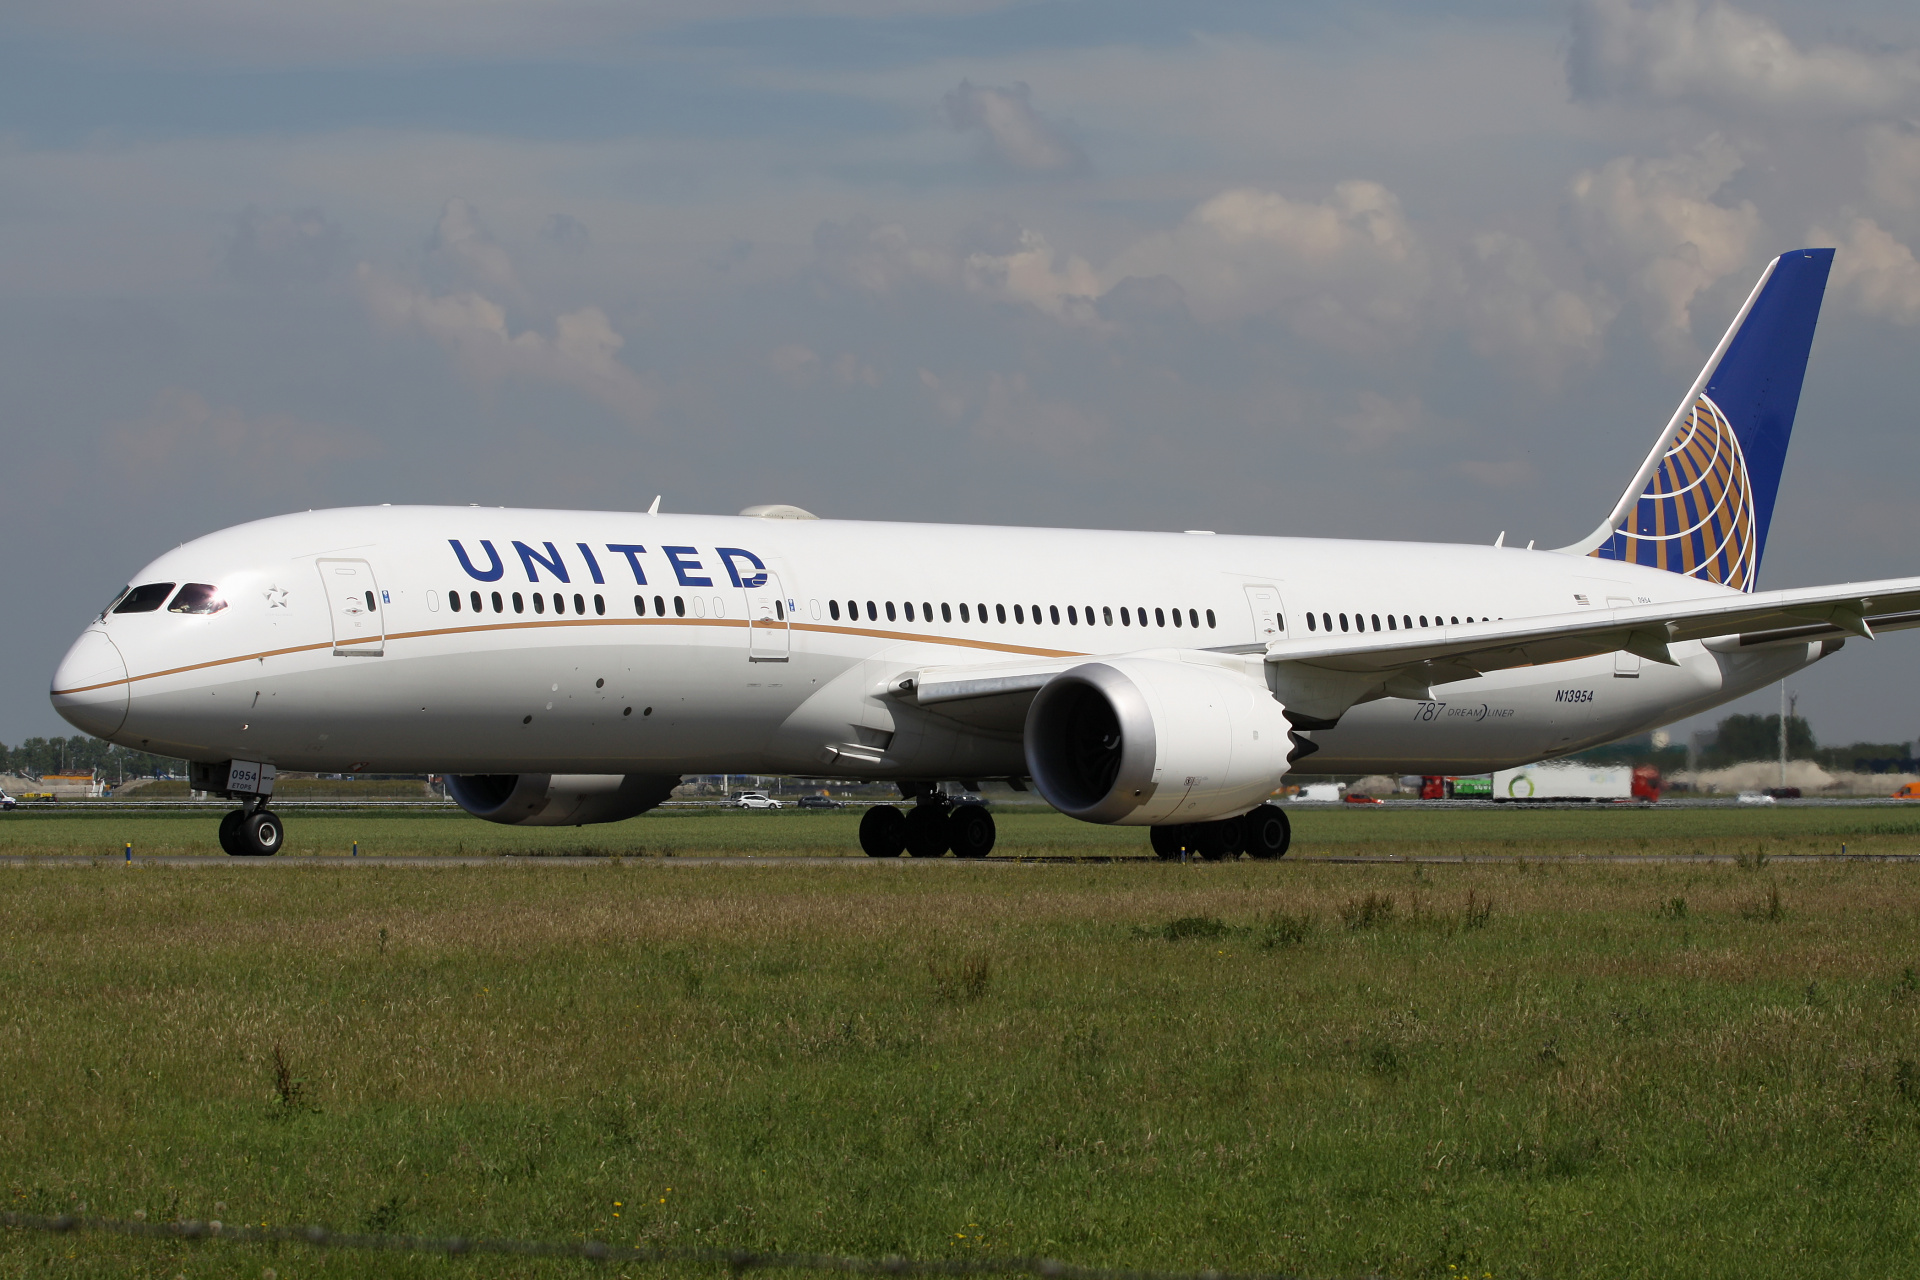 N13954, United Airlines (Aircraft » Schiphol Spotting » Boeing 787-9 Dreamliner)